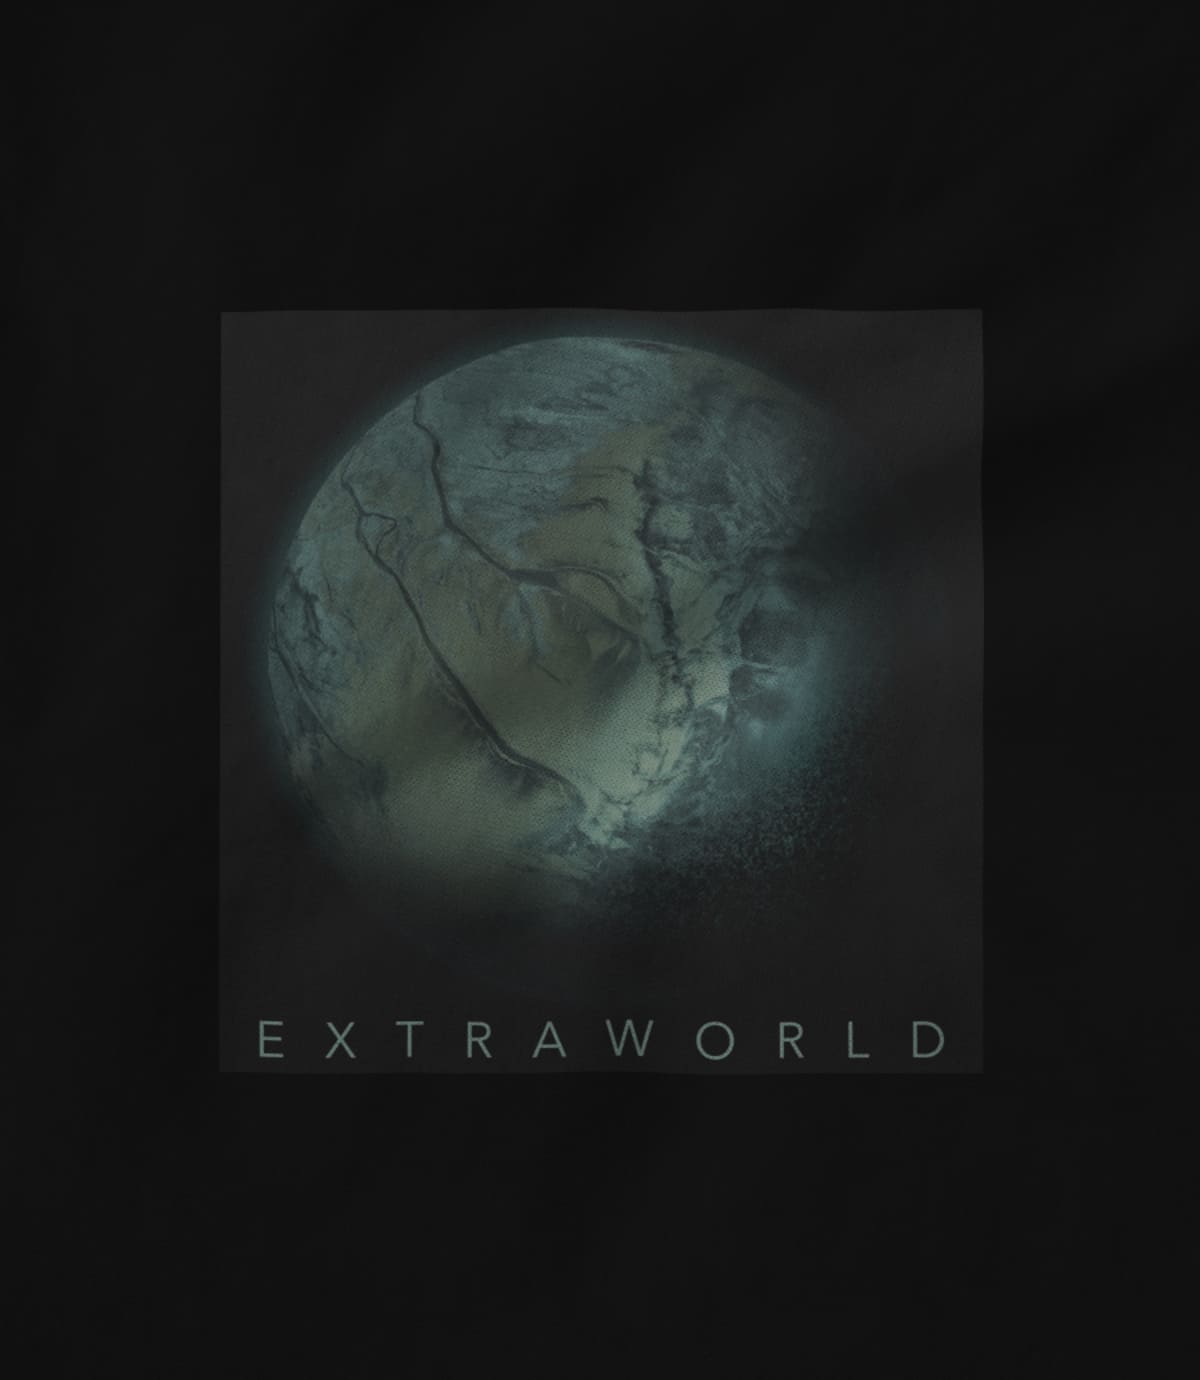 Extraworld